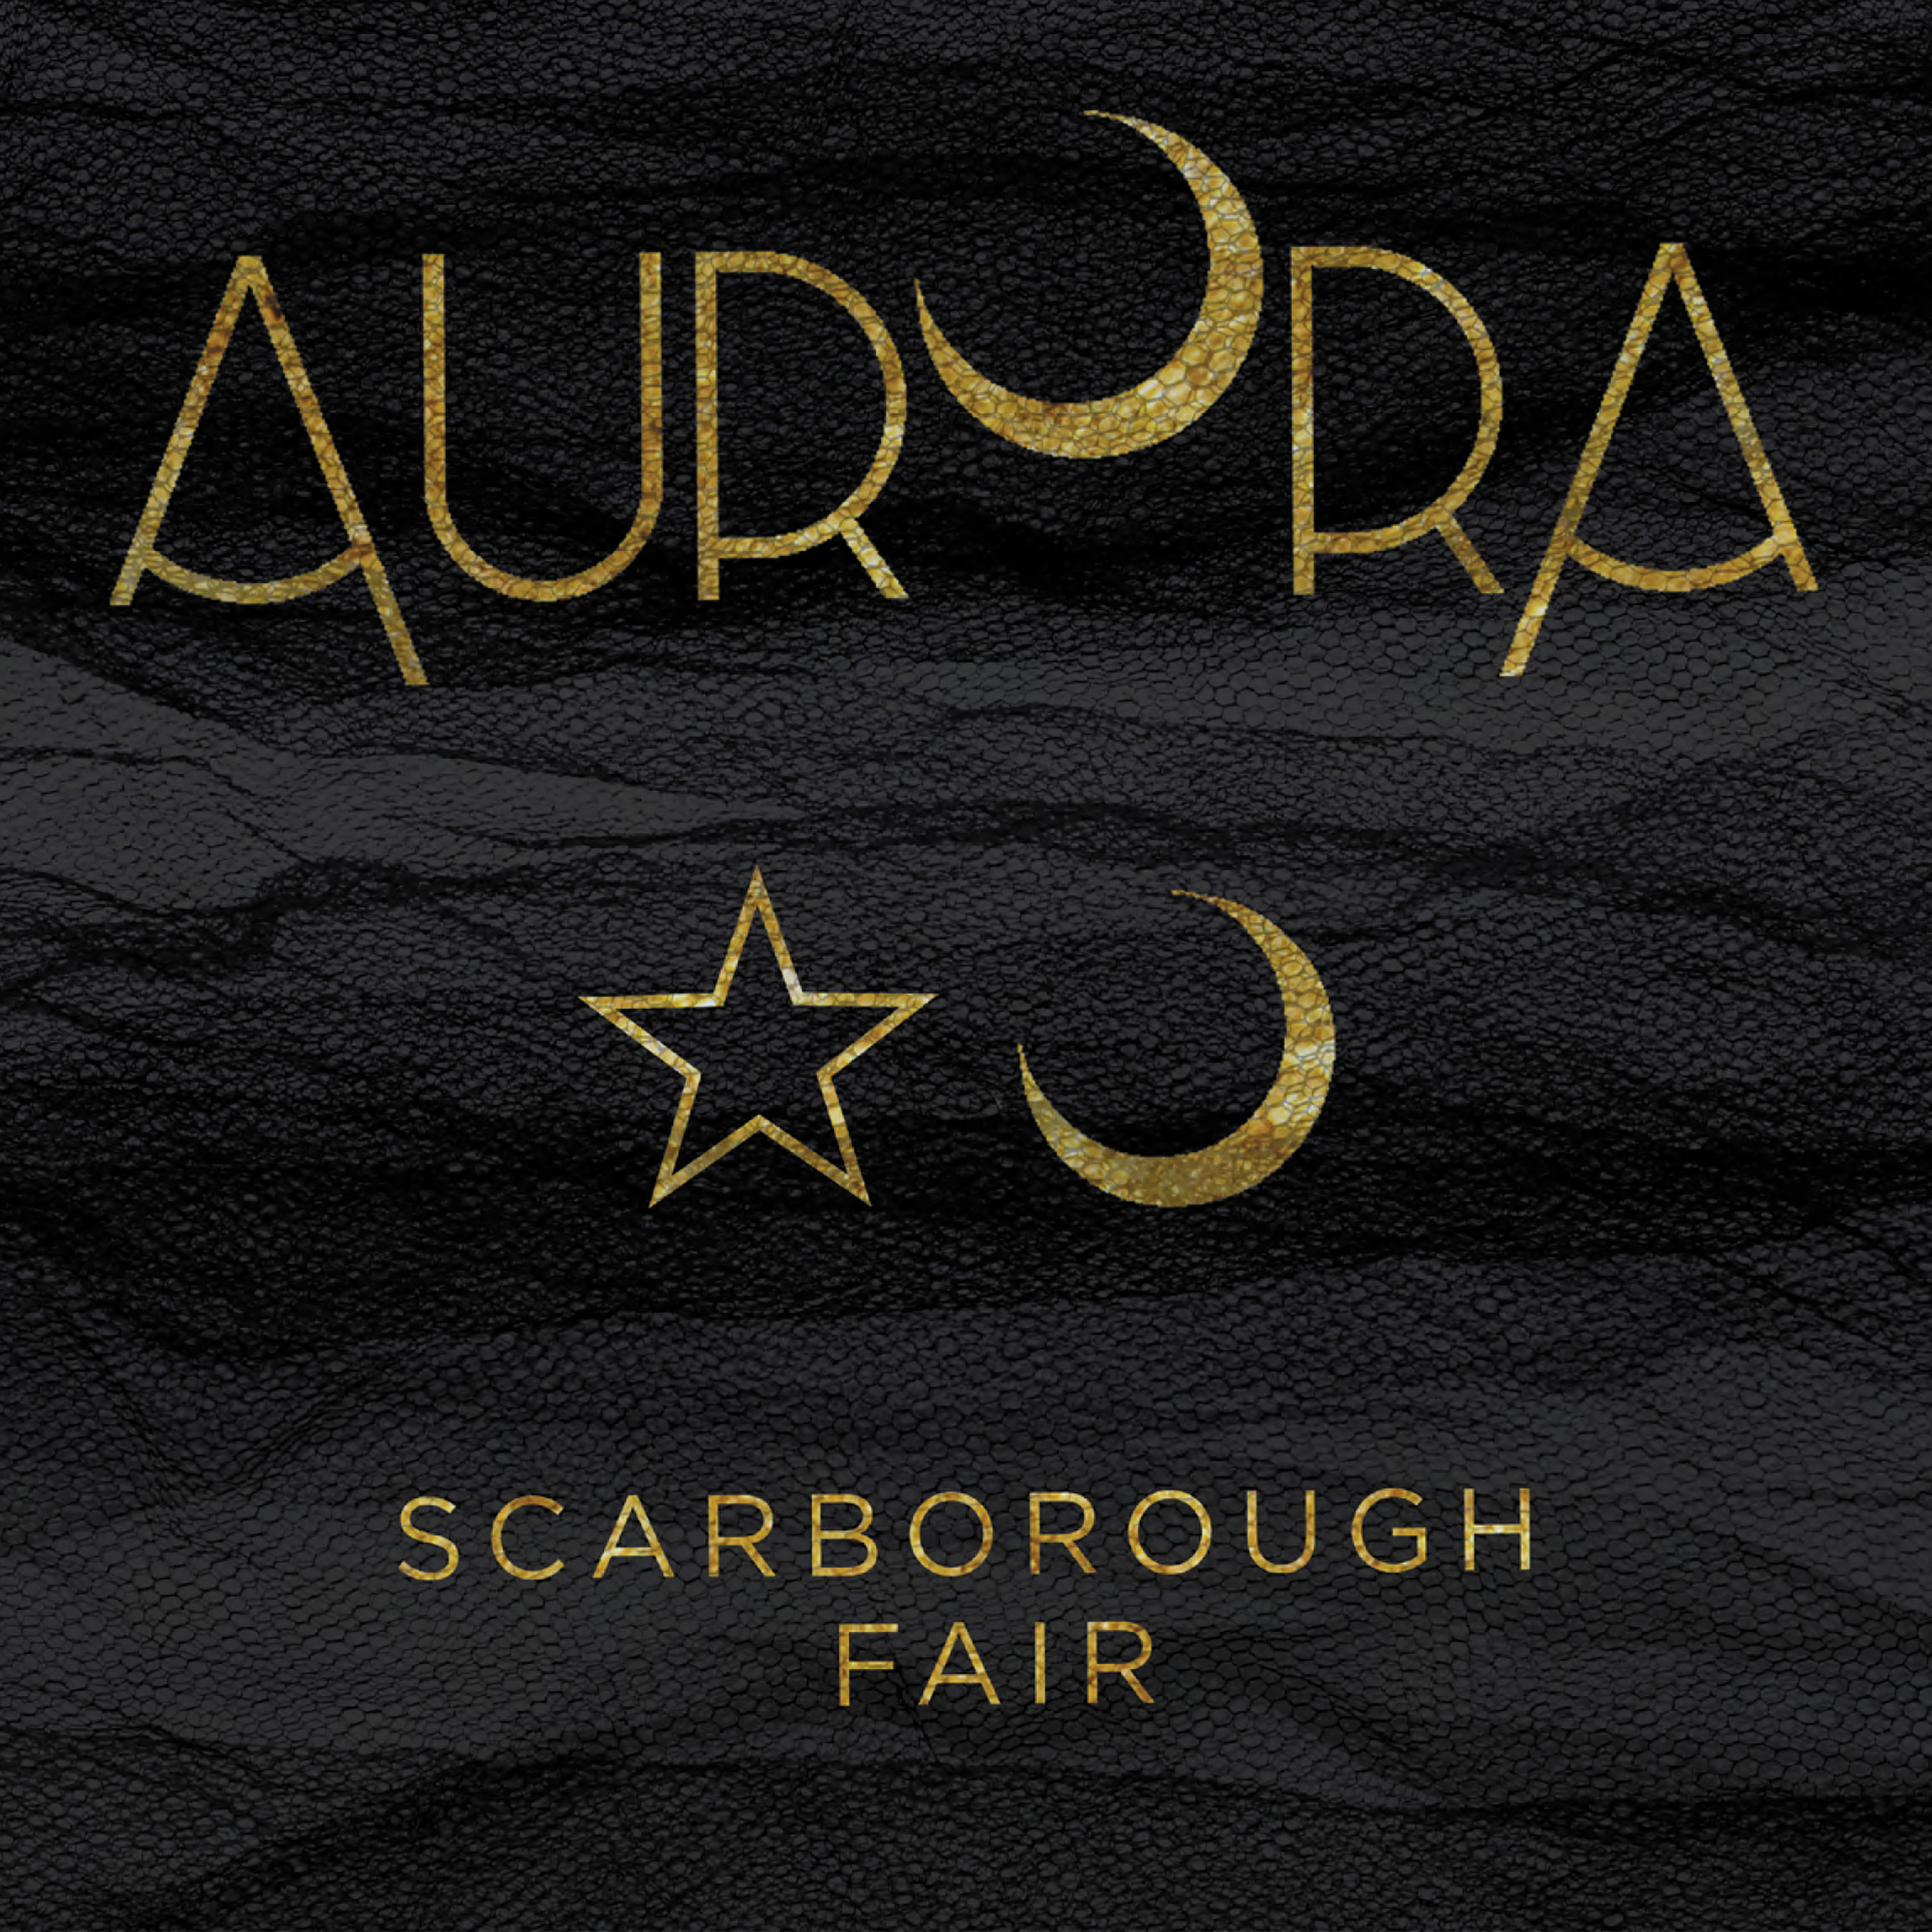 AURORA - Scarborough Fair (From Deus Salve O Rei) 